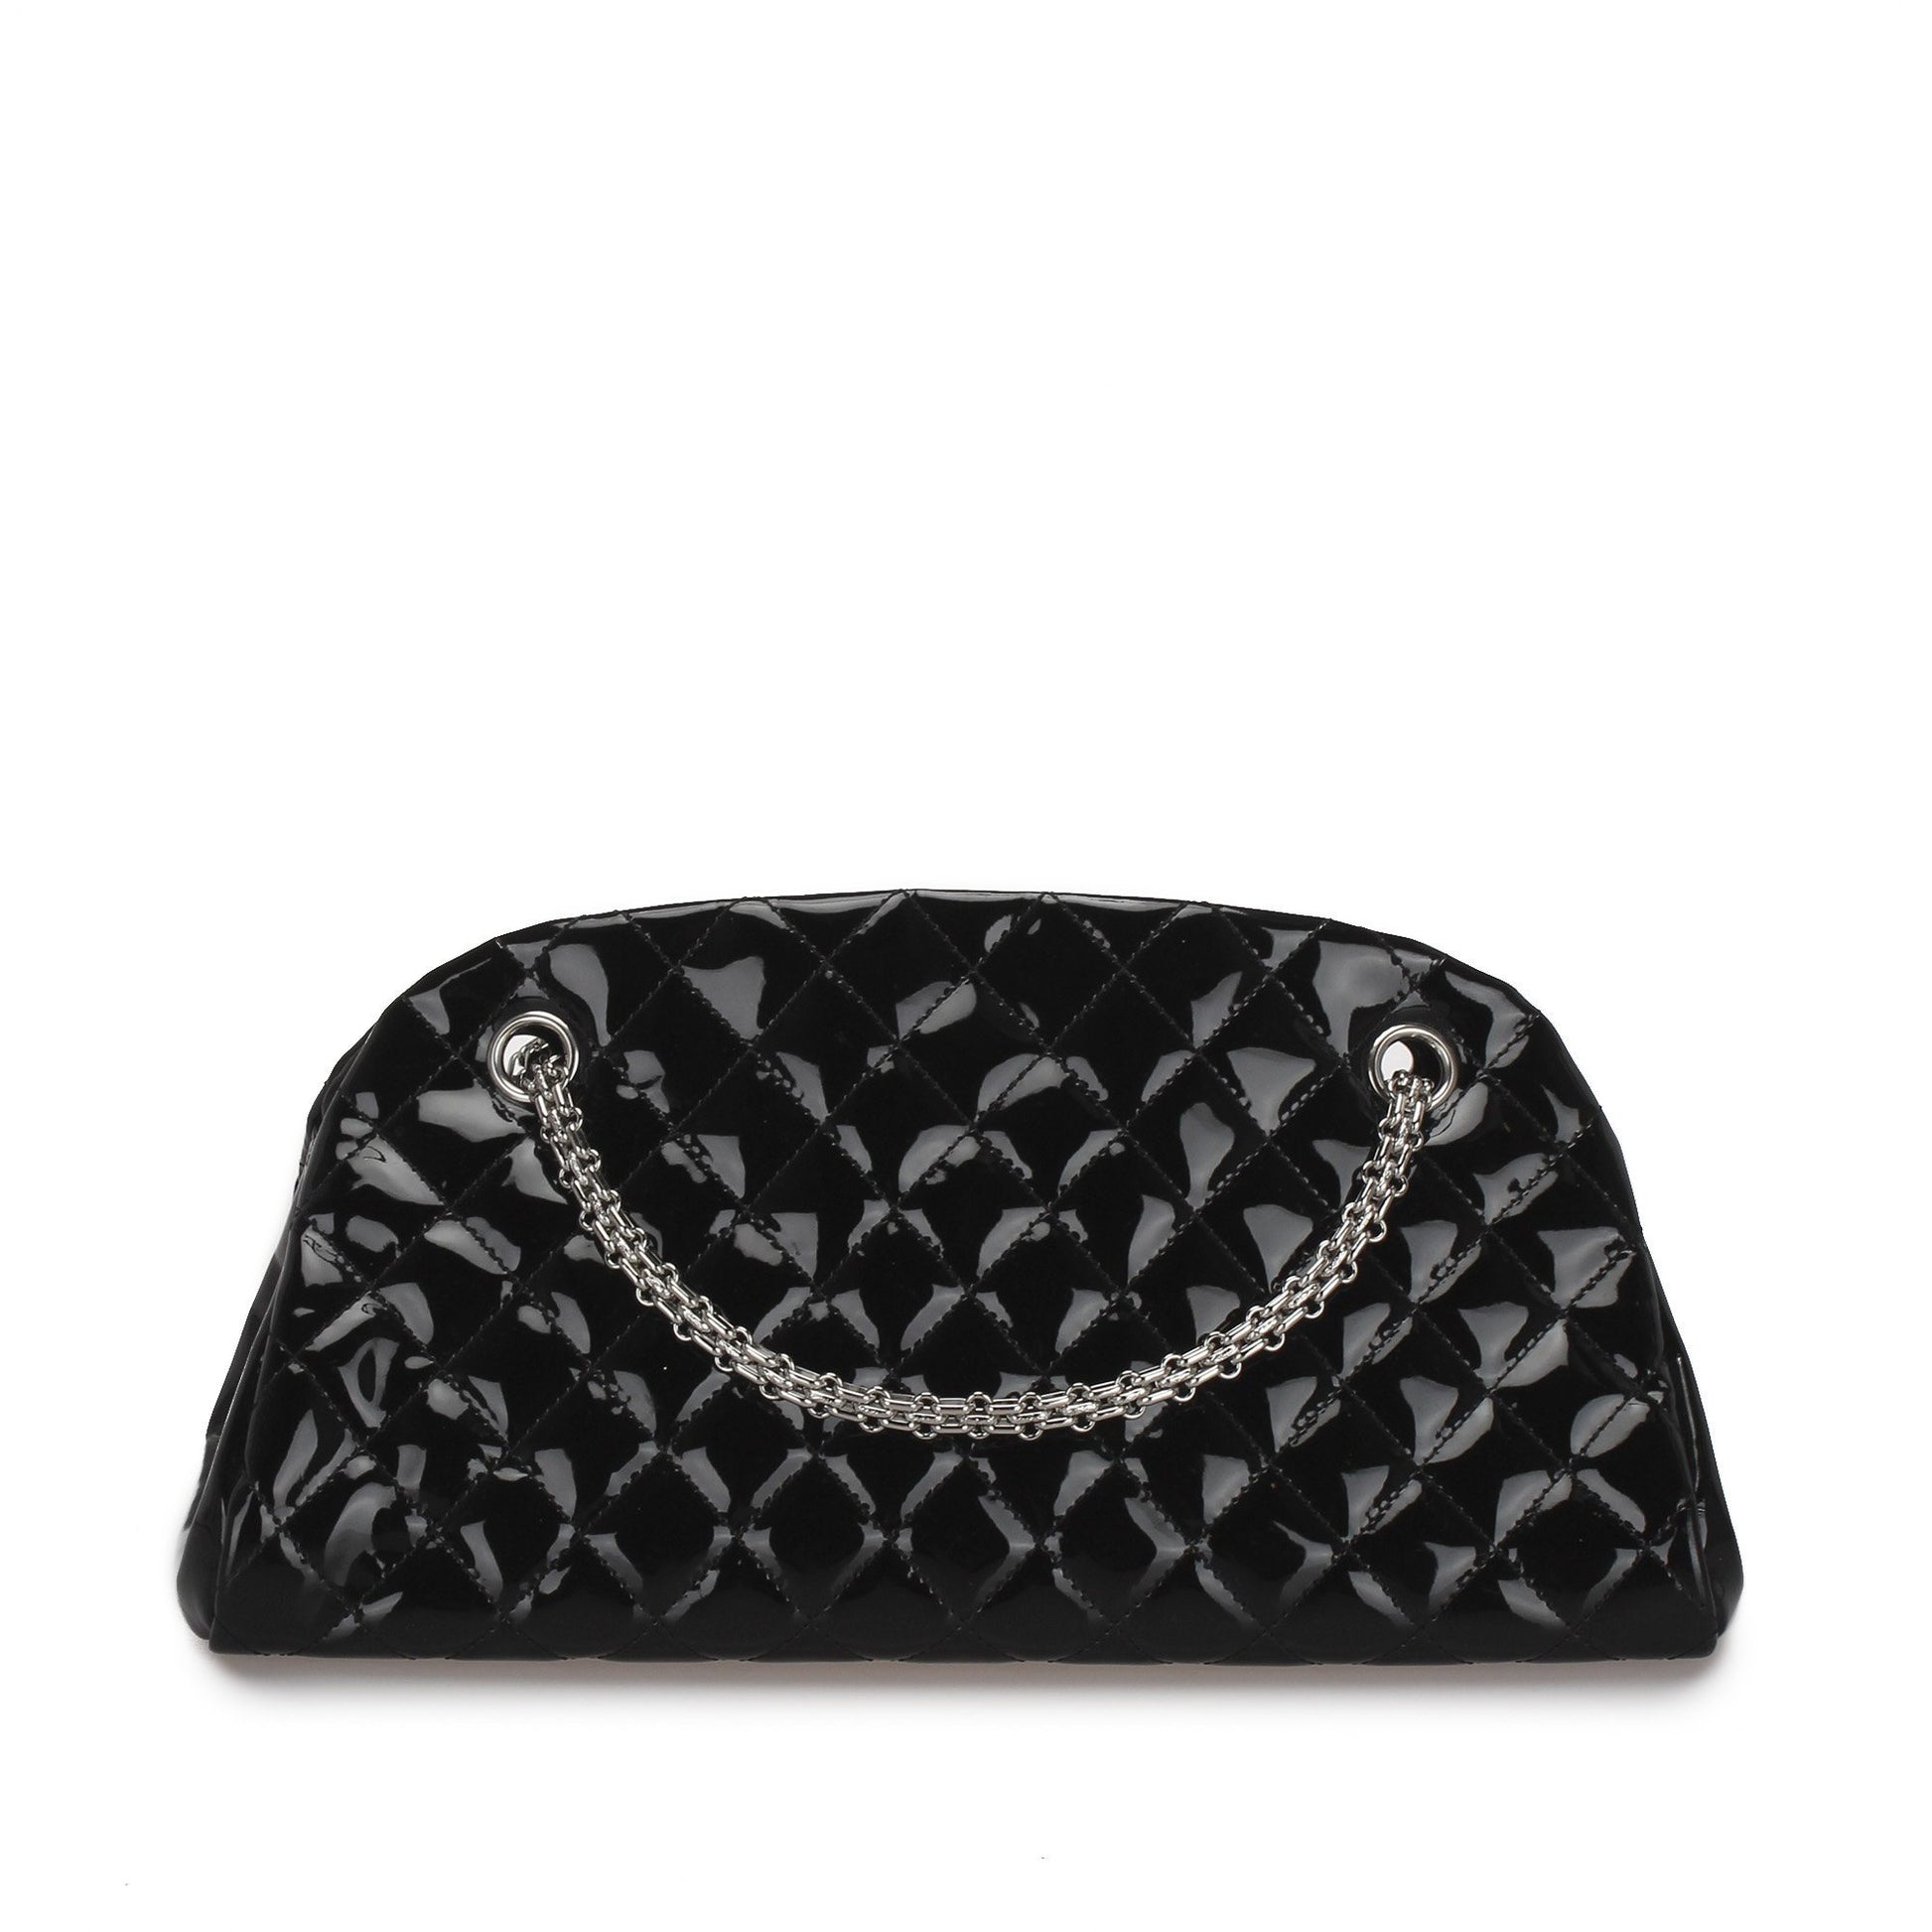 Chanel Black Mademoiselle Bowling Bag